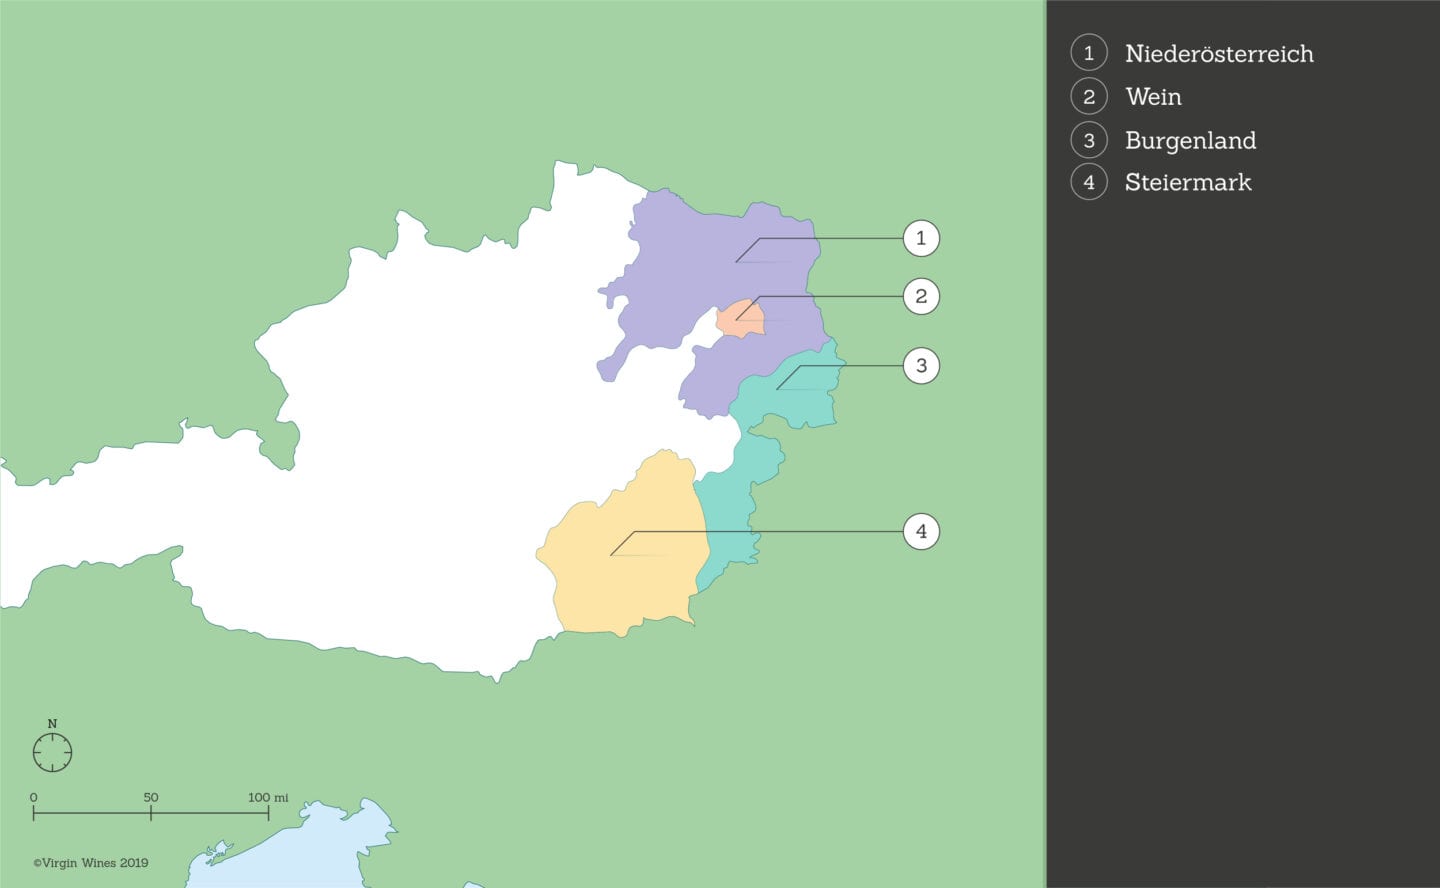 Austrian Wine Regions Map